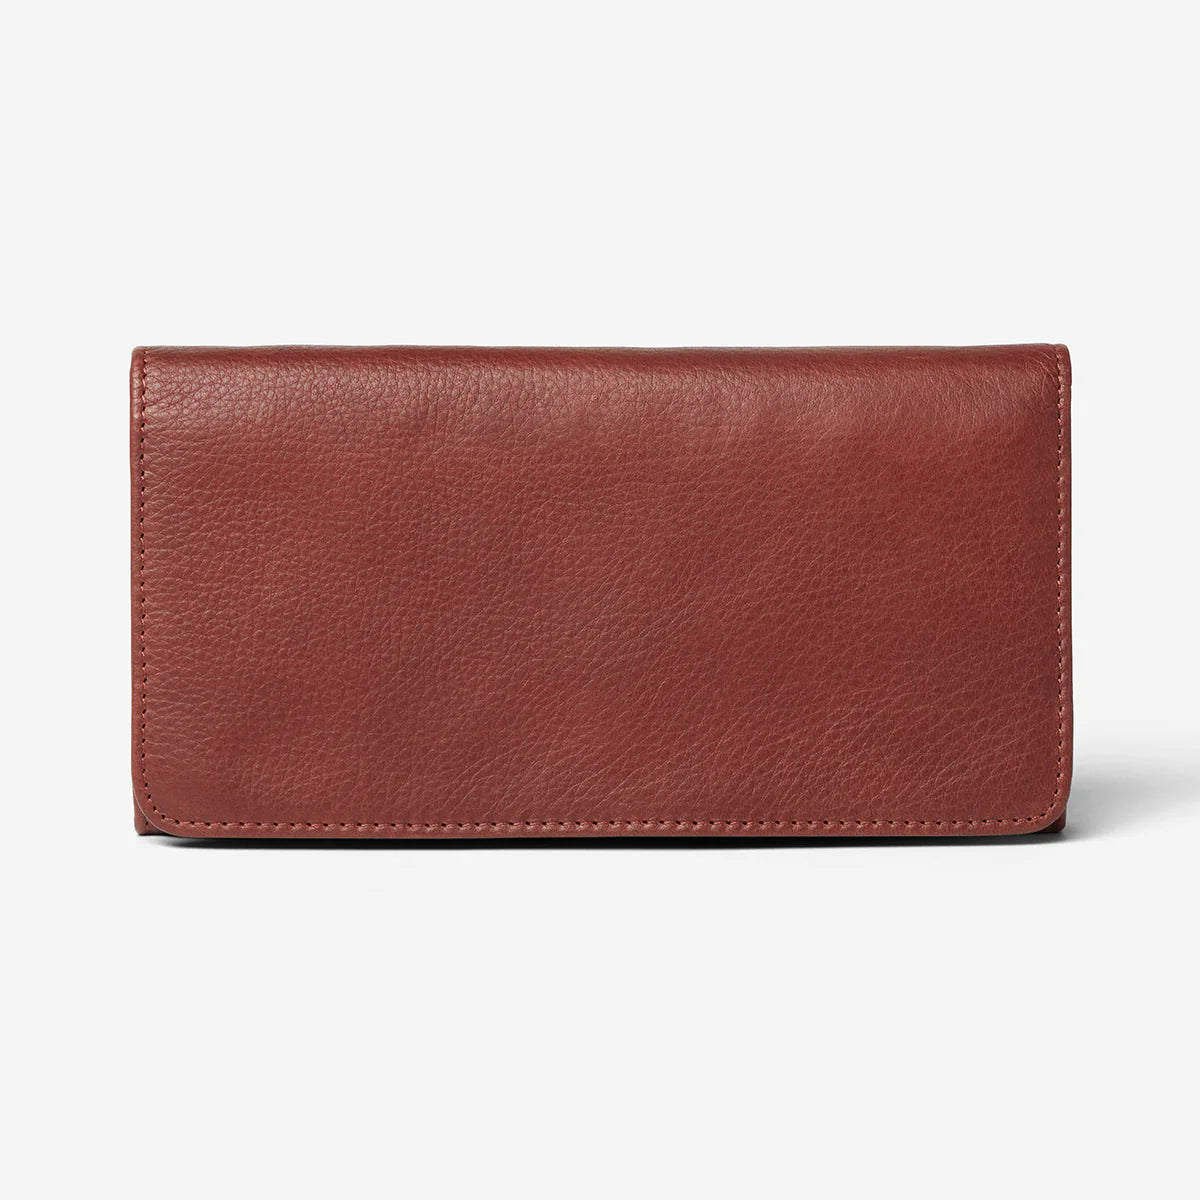 Osgoode Marley Leather RFID Checkbook Wallet- 1236